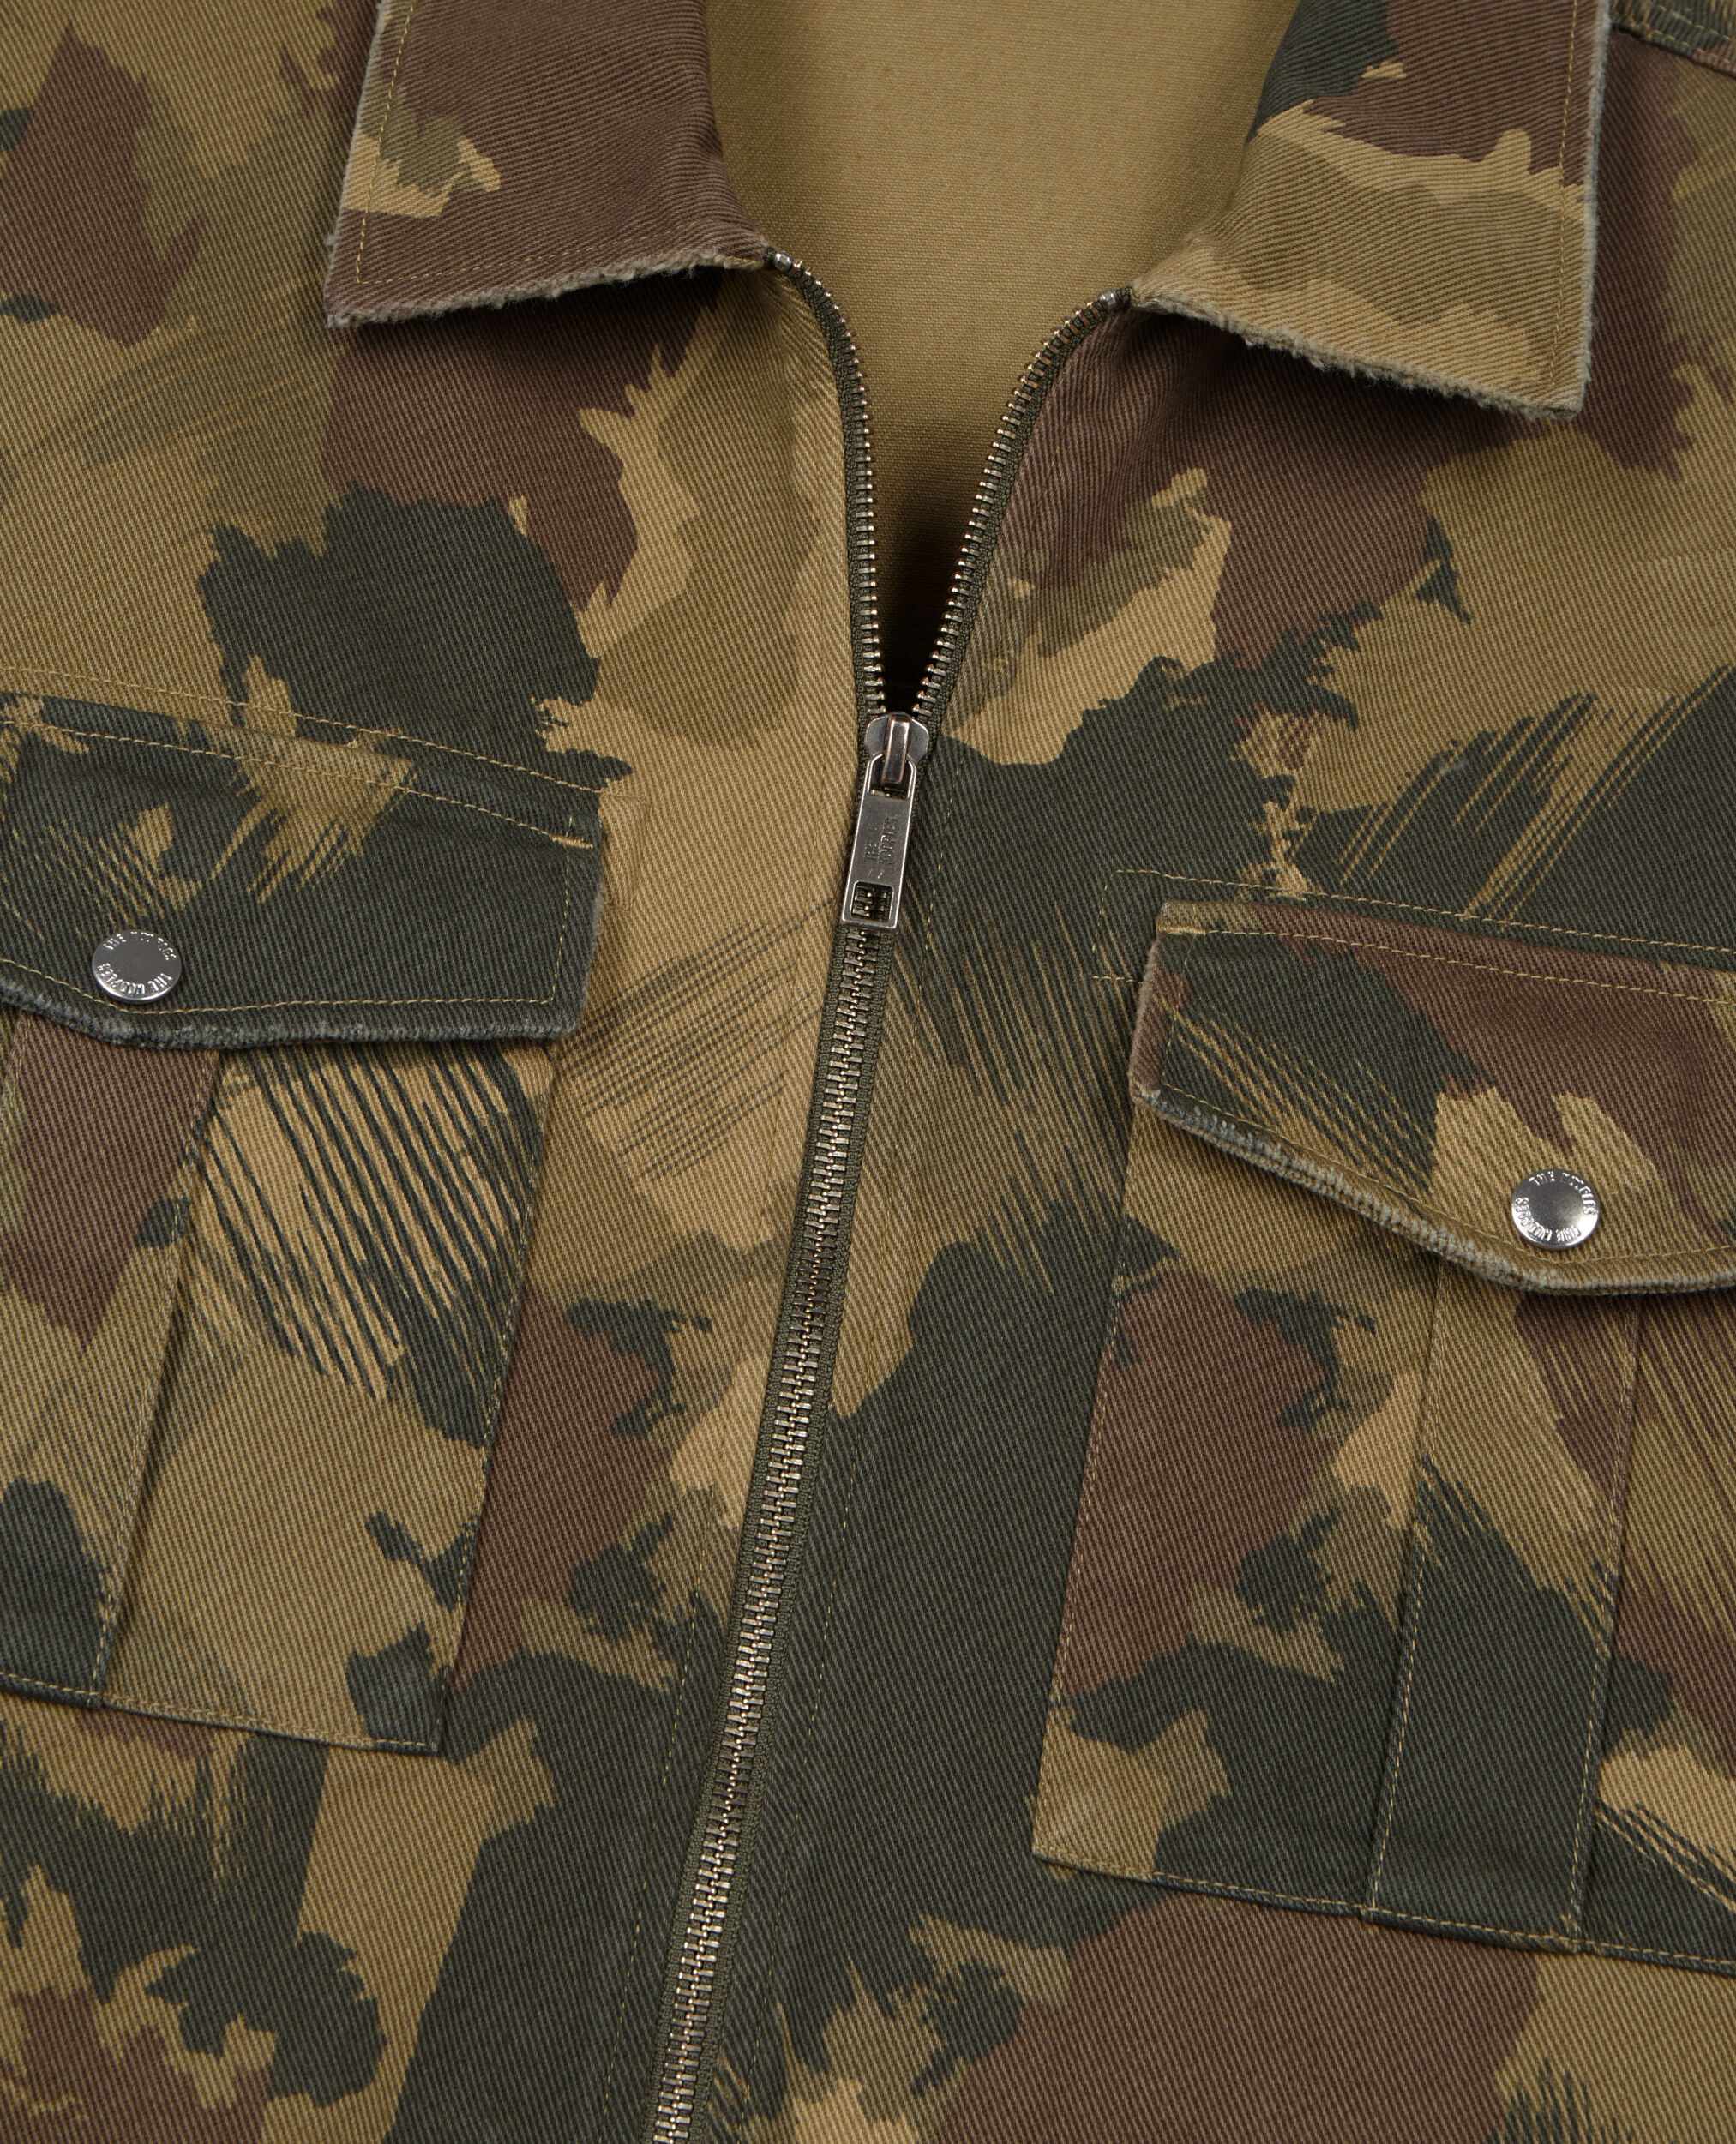 Camouflage jacket, CAMOUFLAGE, hi-res image number null